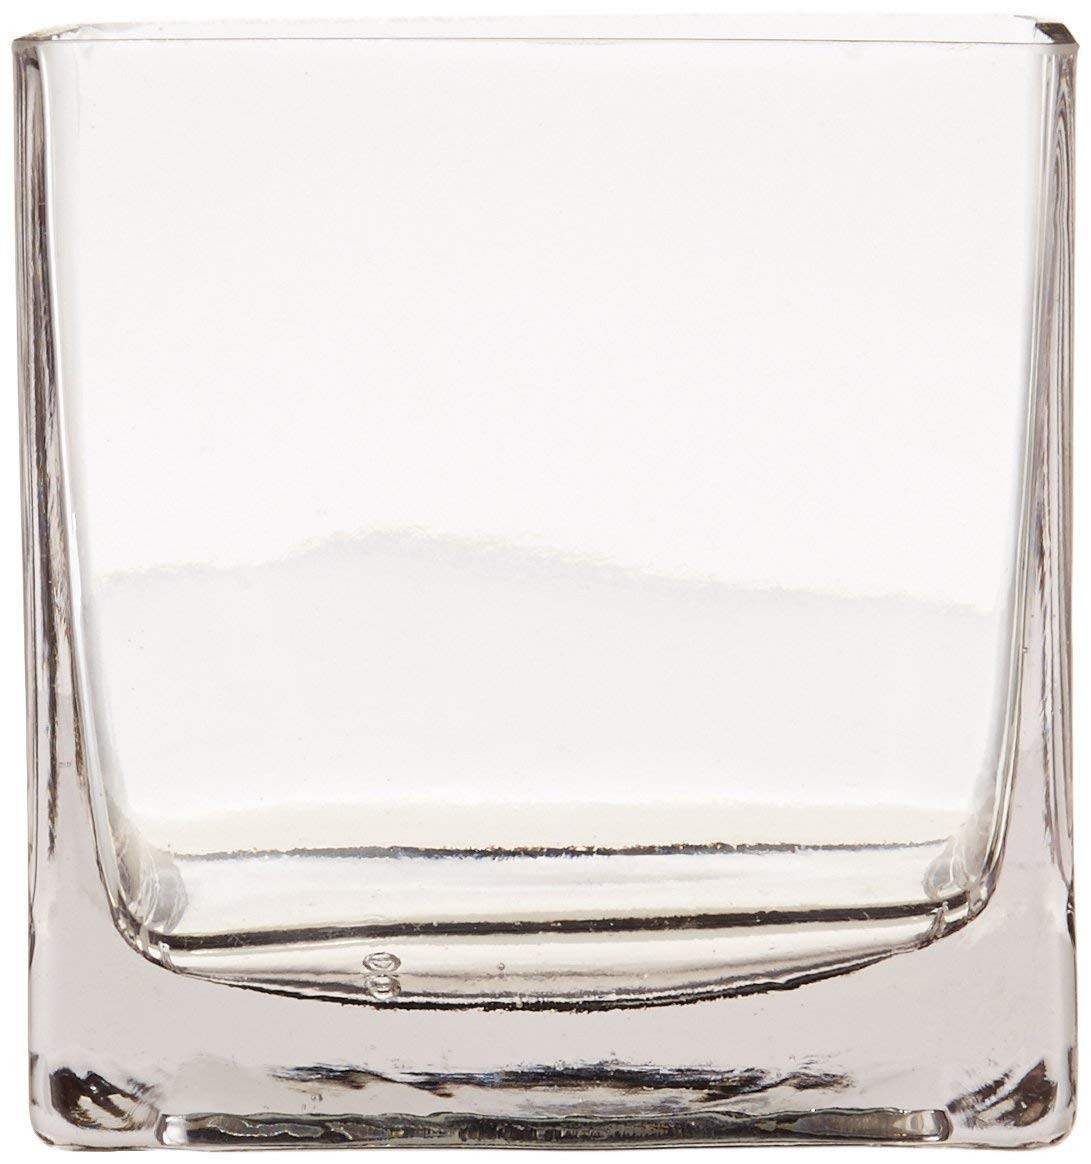 18 Ideal 6 Inch Crystal Vase 2024 free download 6 inch crystal vase of amazon com 12piece 4 square crystal clear glass vase home kitchen inside 61odrrfbtgl sl1164